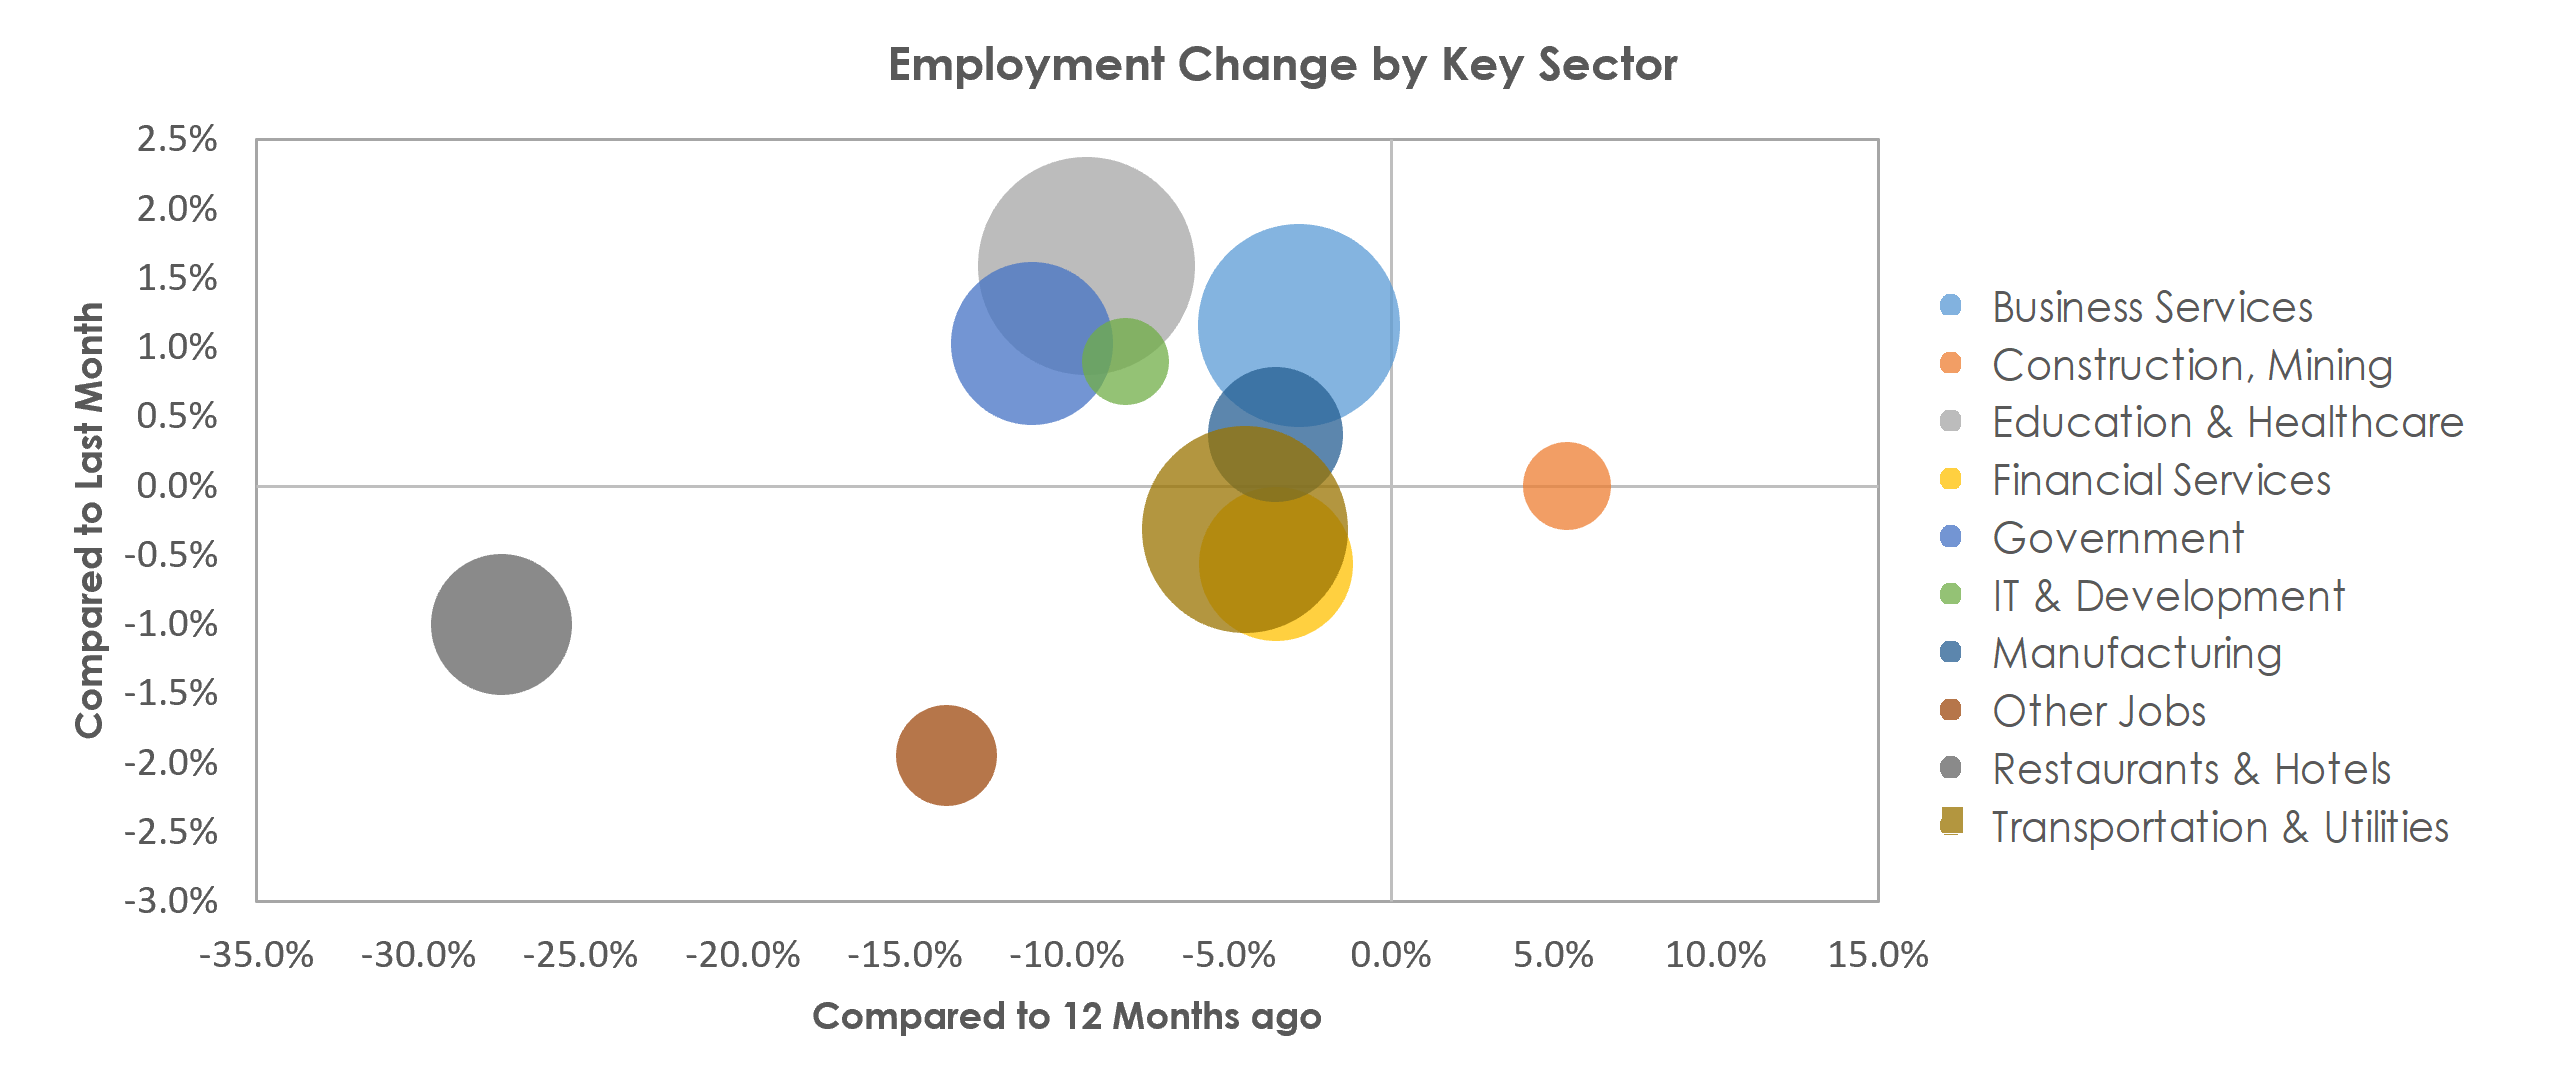 Bridgeport-Stamford-Norwalk, CT Unemployment by Industry February 2021